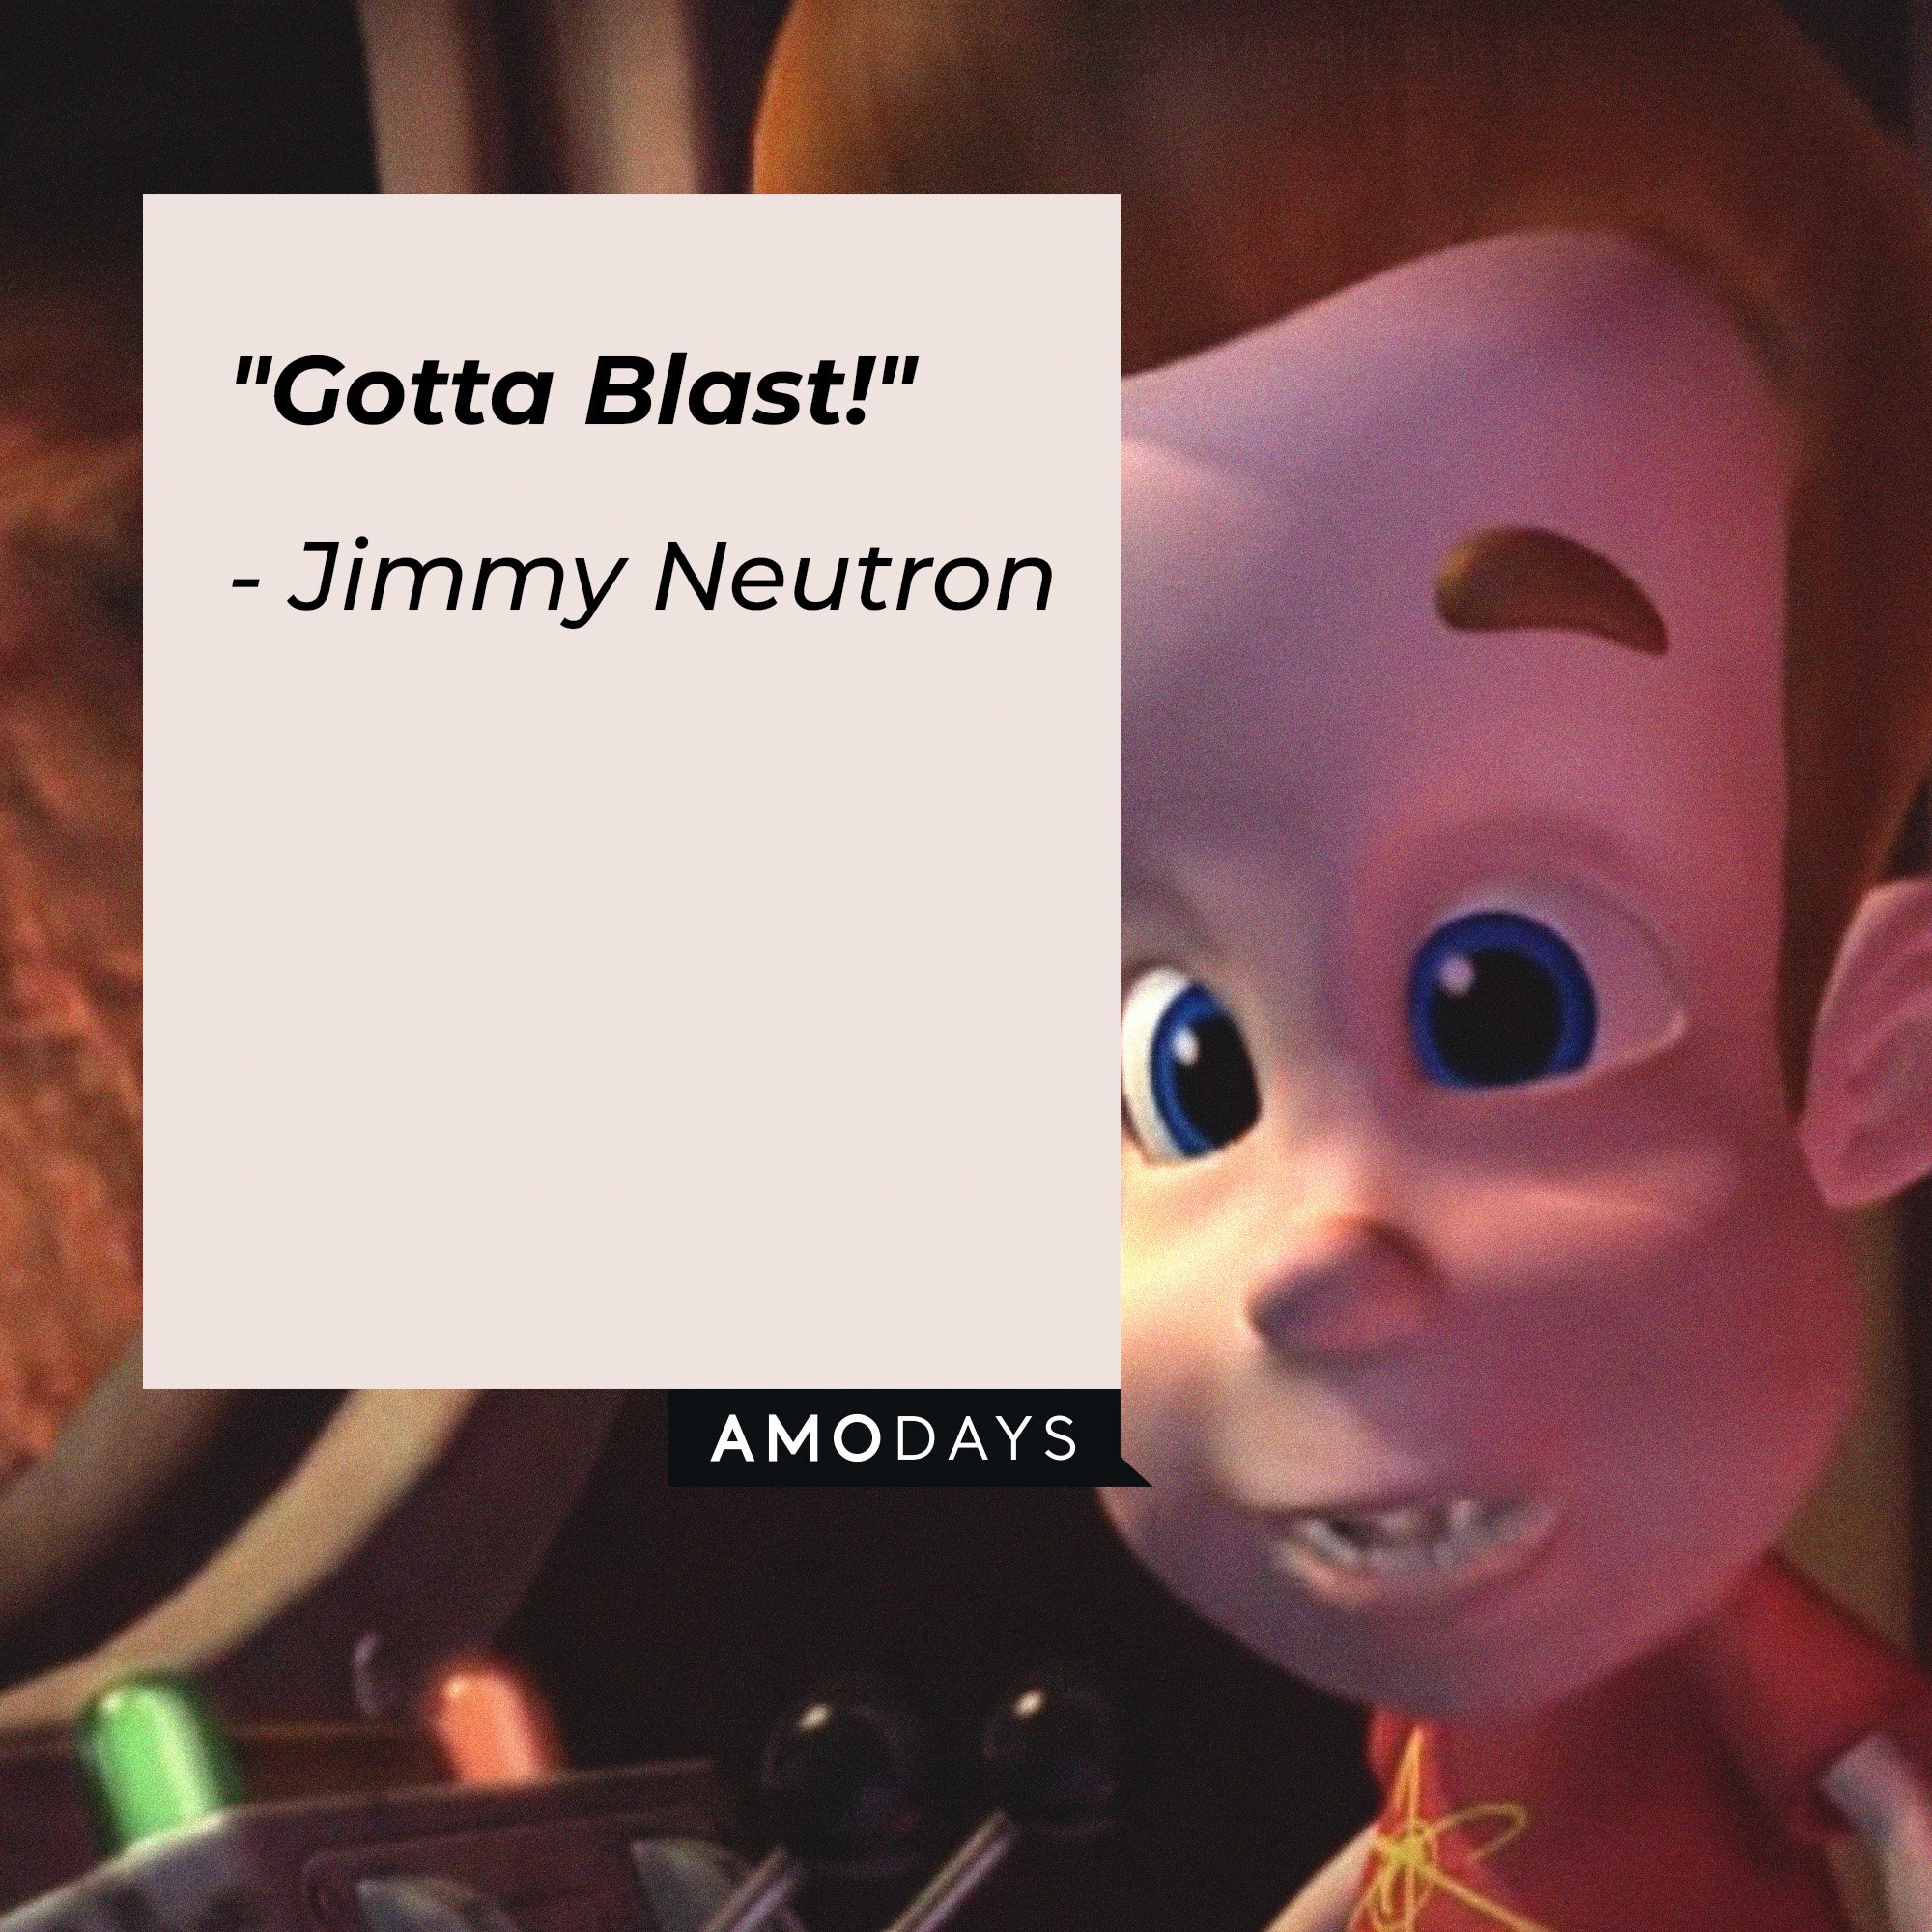 Jimmy Neutron’s quote: "Gotta Blast!"  | Image: AmoDays